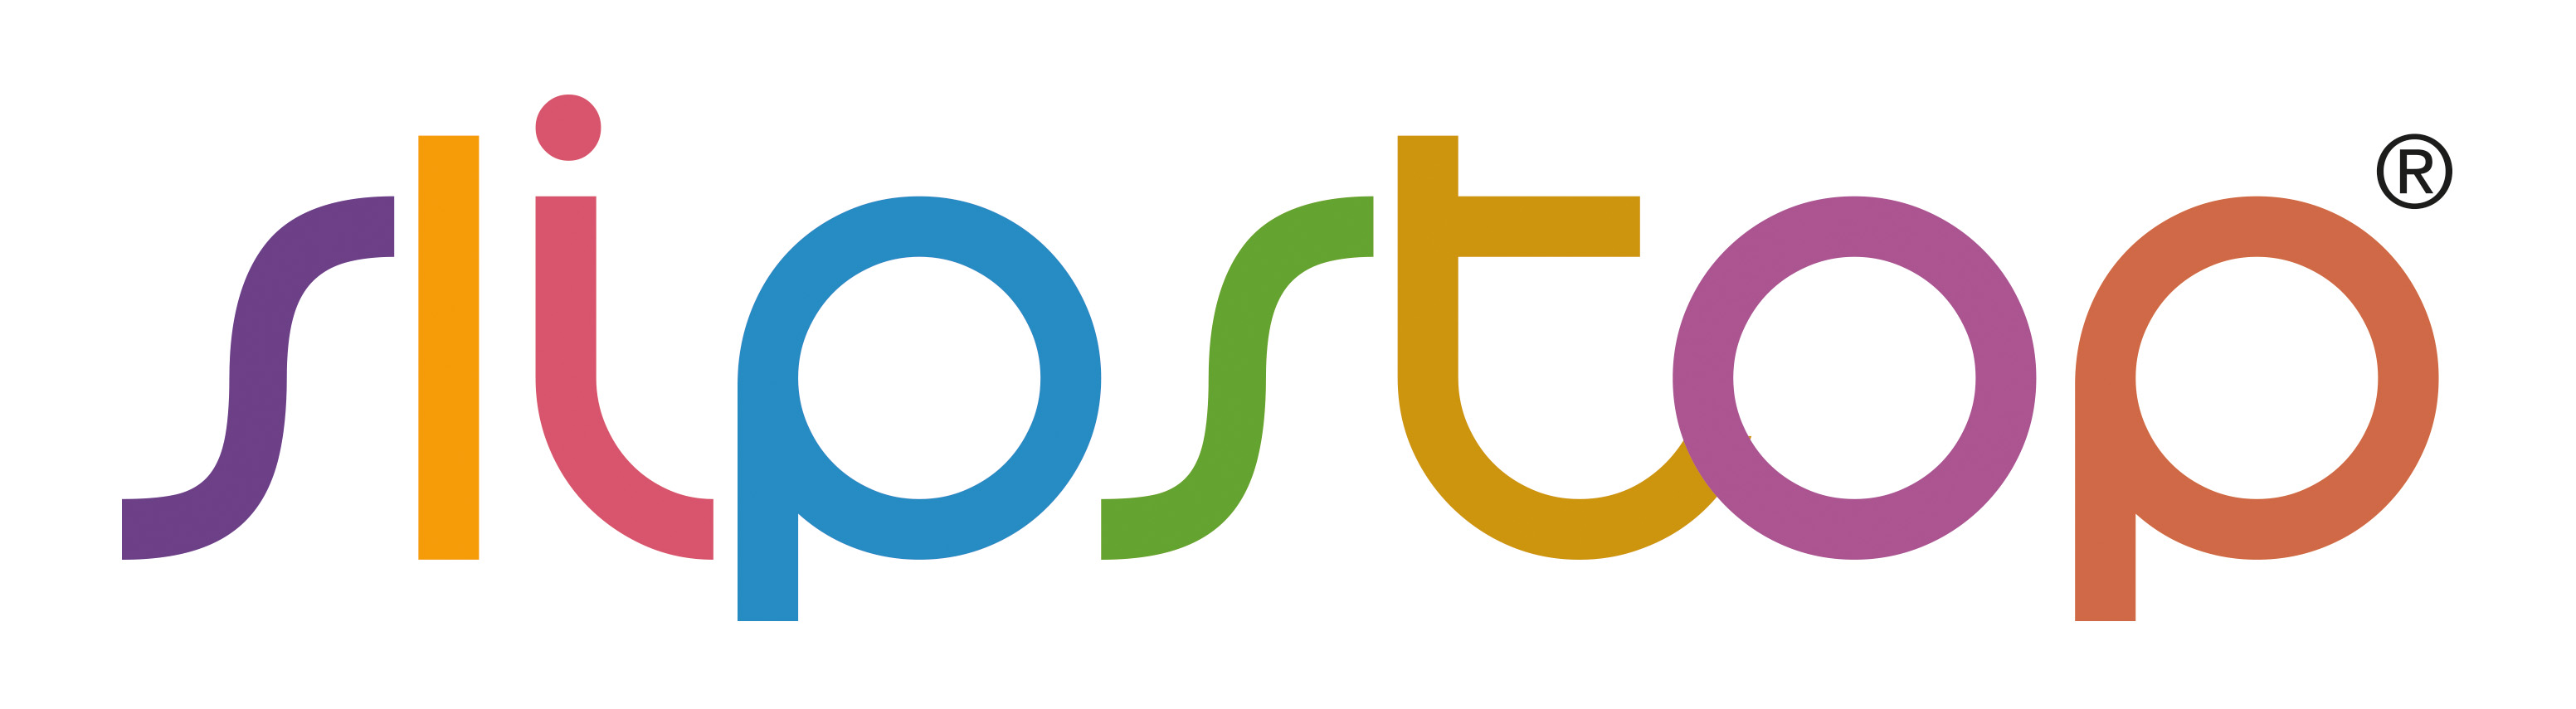 Slipstop logo